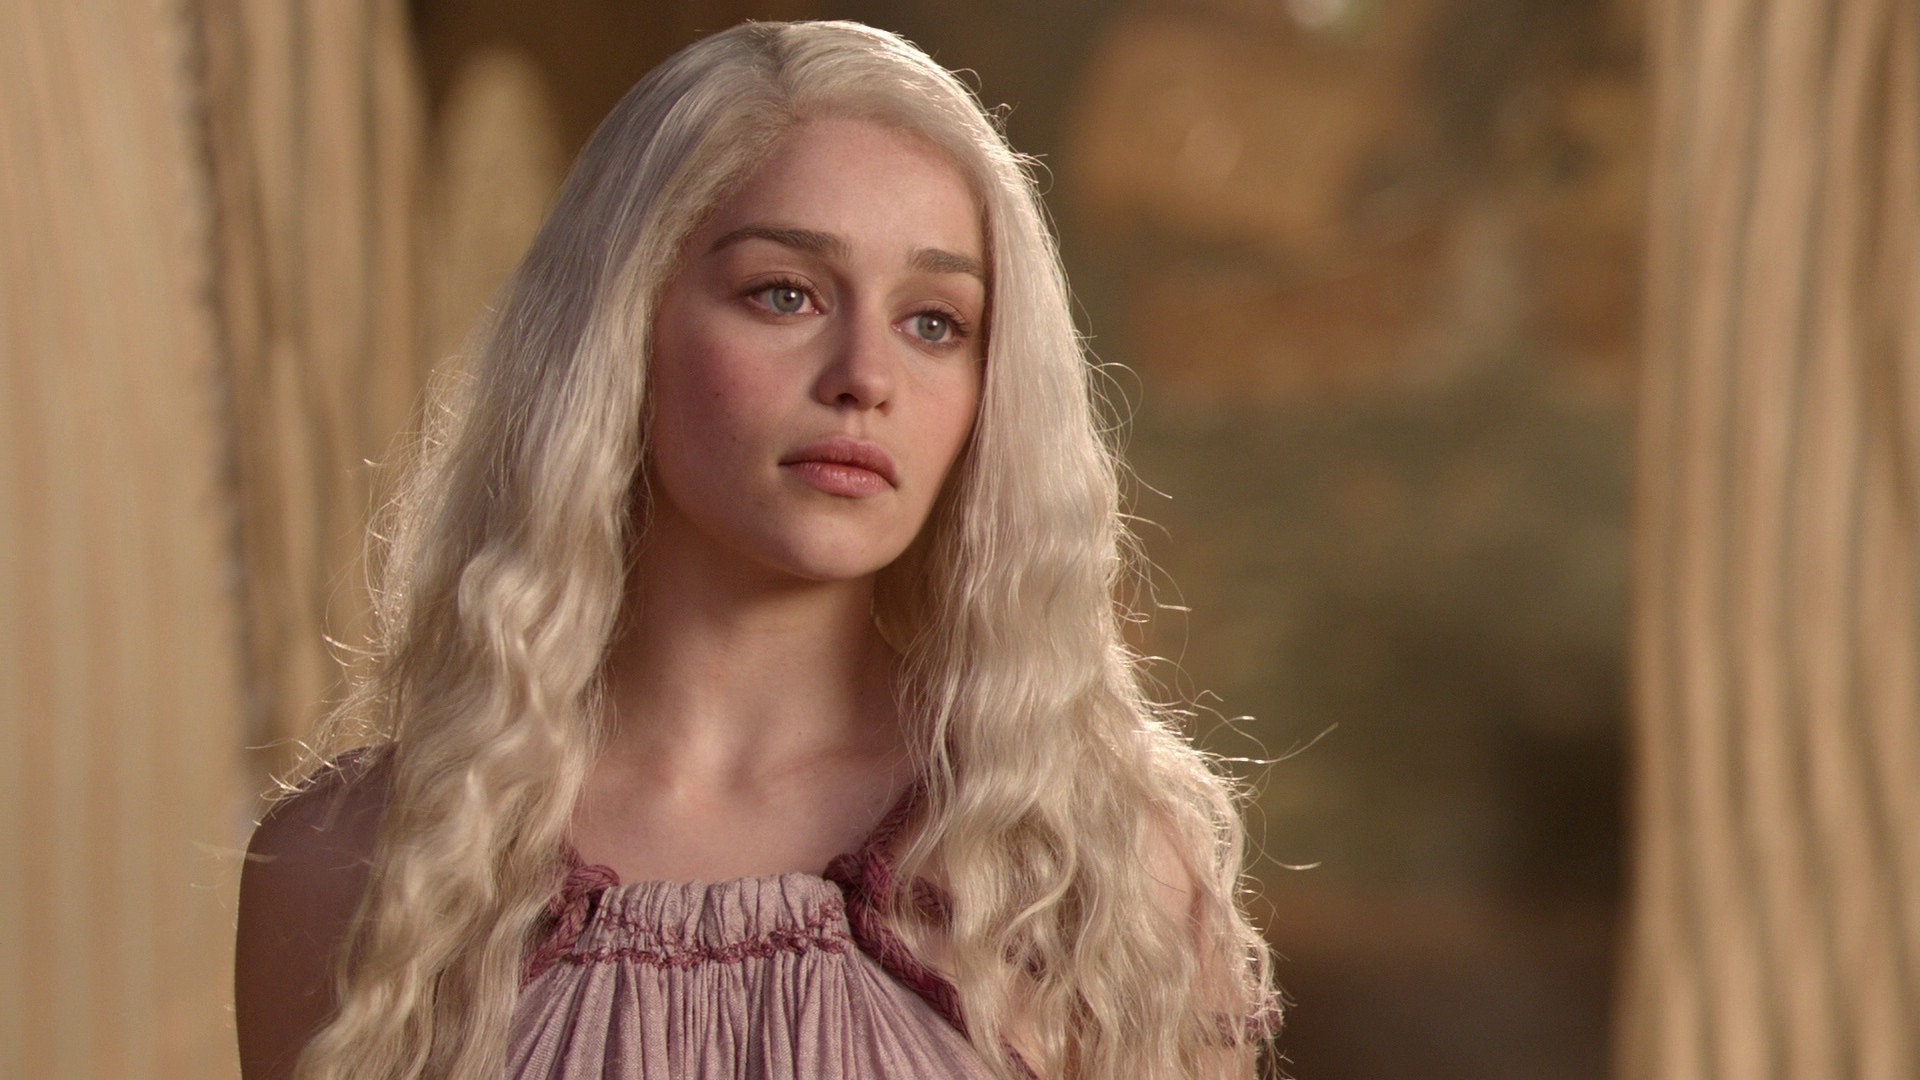  lies de marketing com Daenerys Targaryen de Game of Thrones